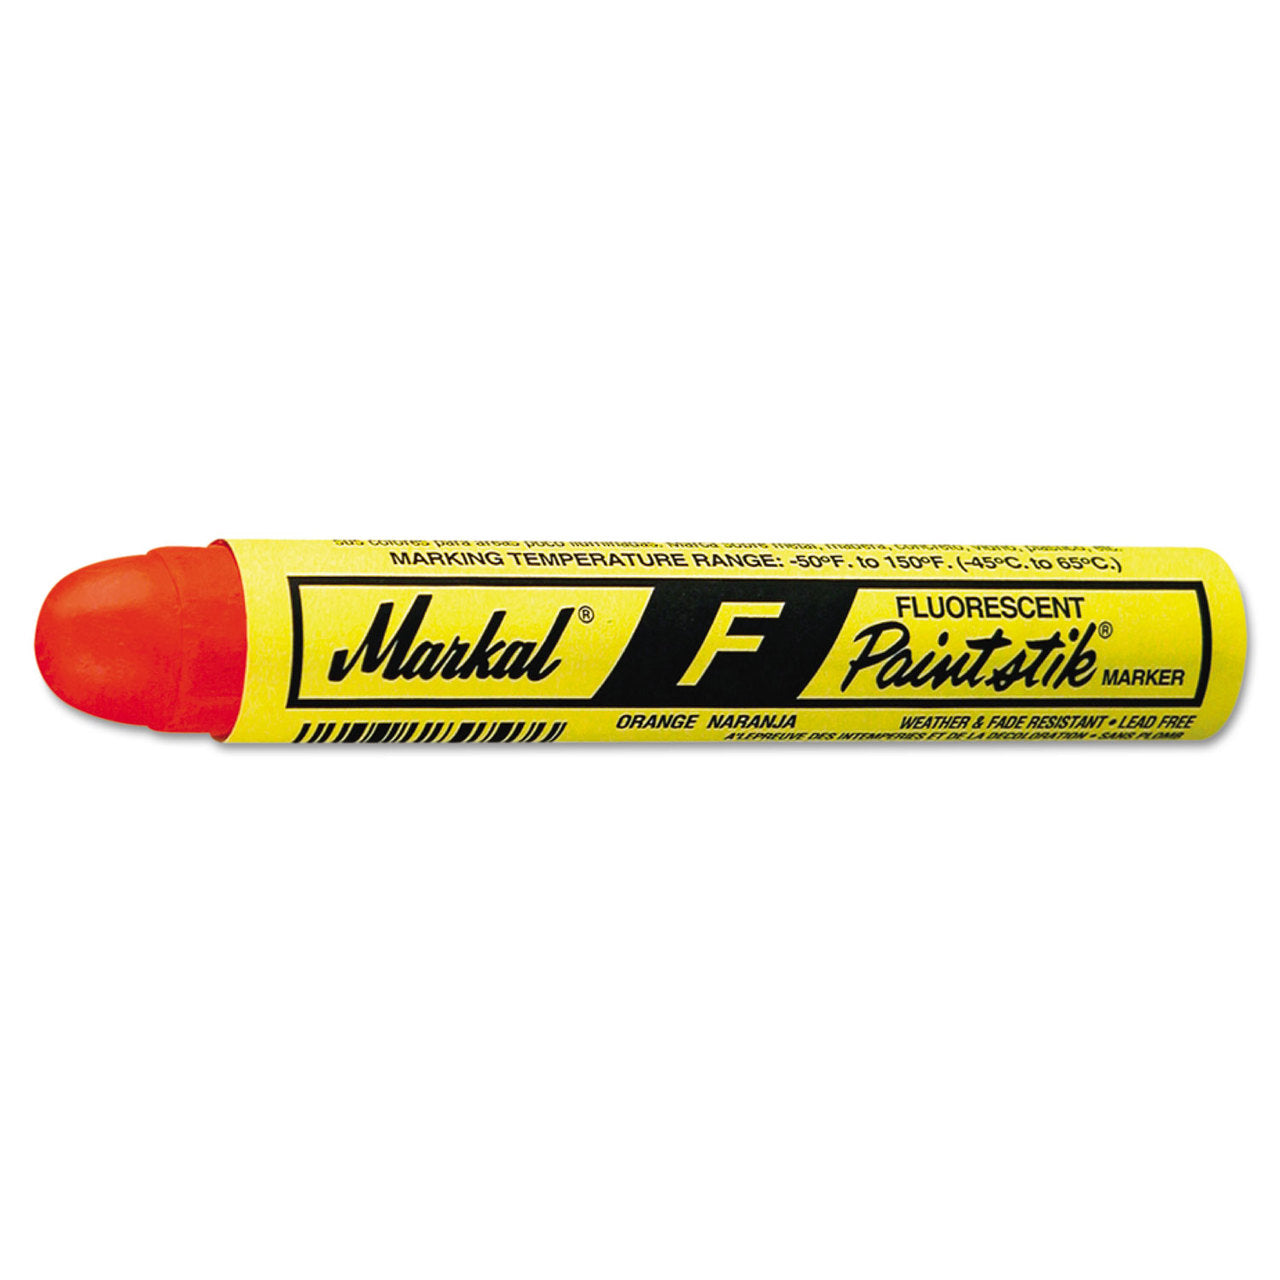 MARKAL Window Marker Removable Liquid Paint Marker, Orange at